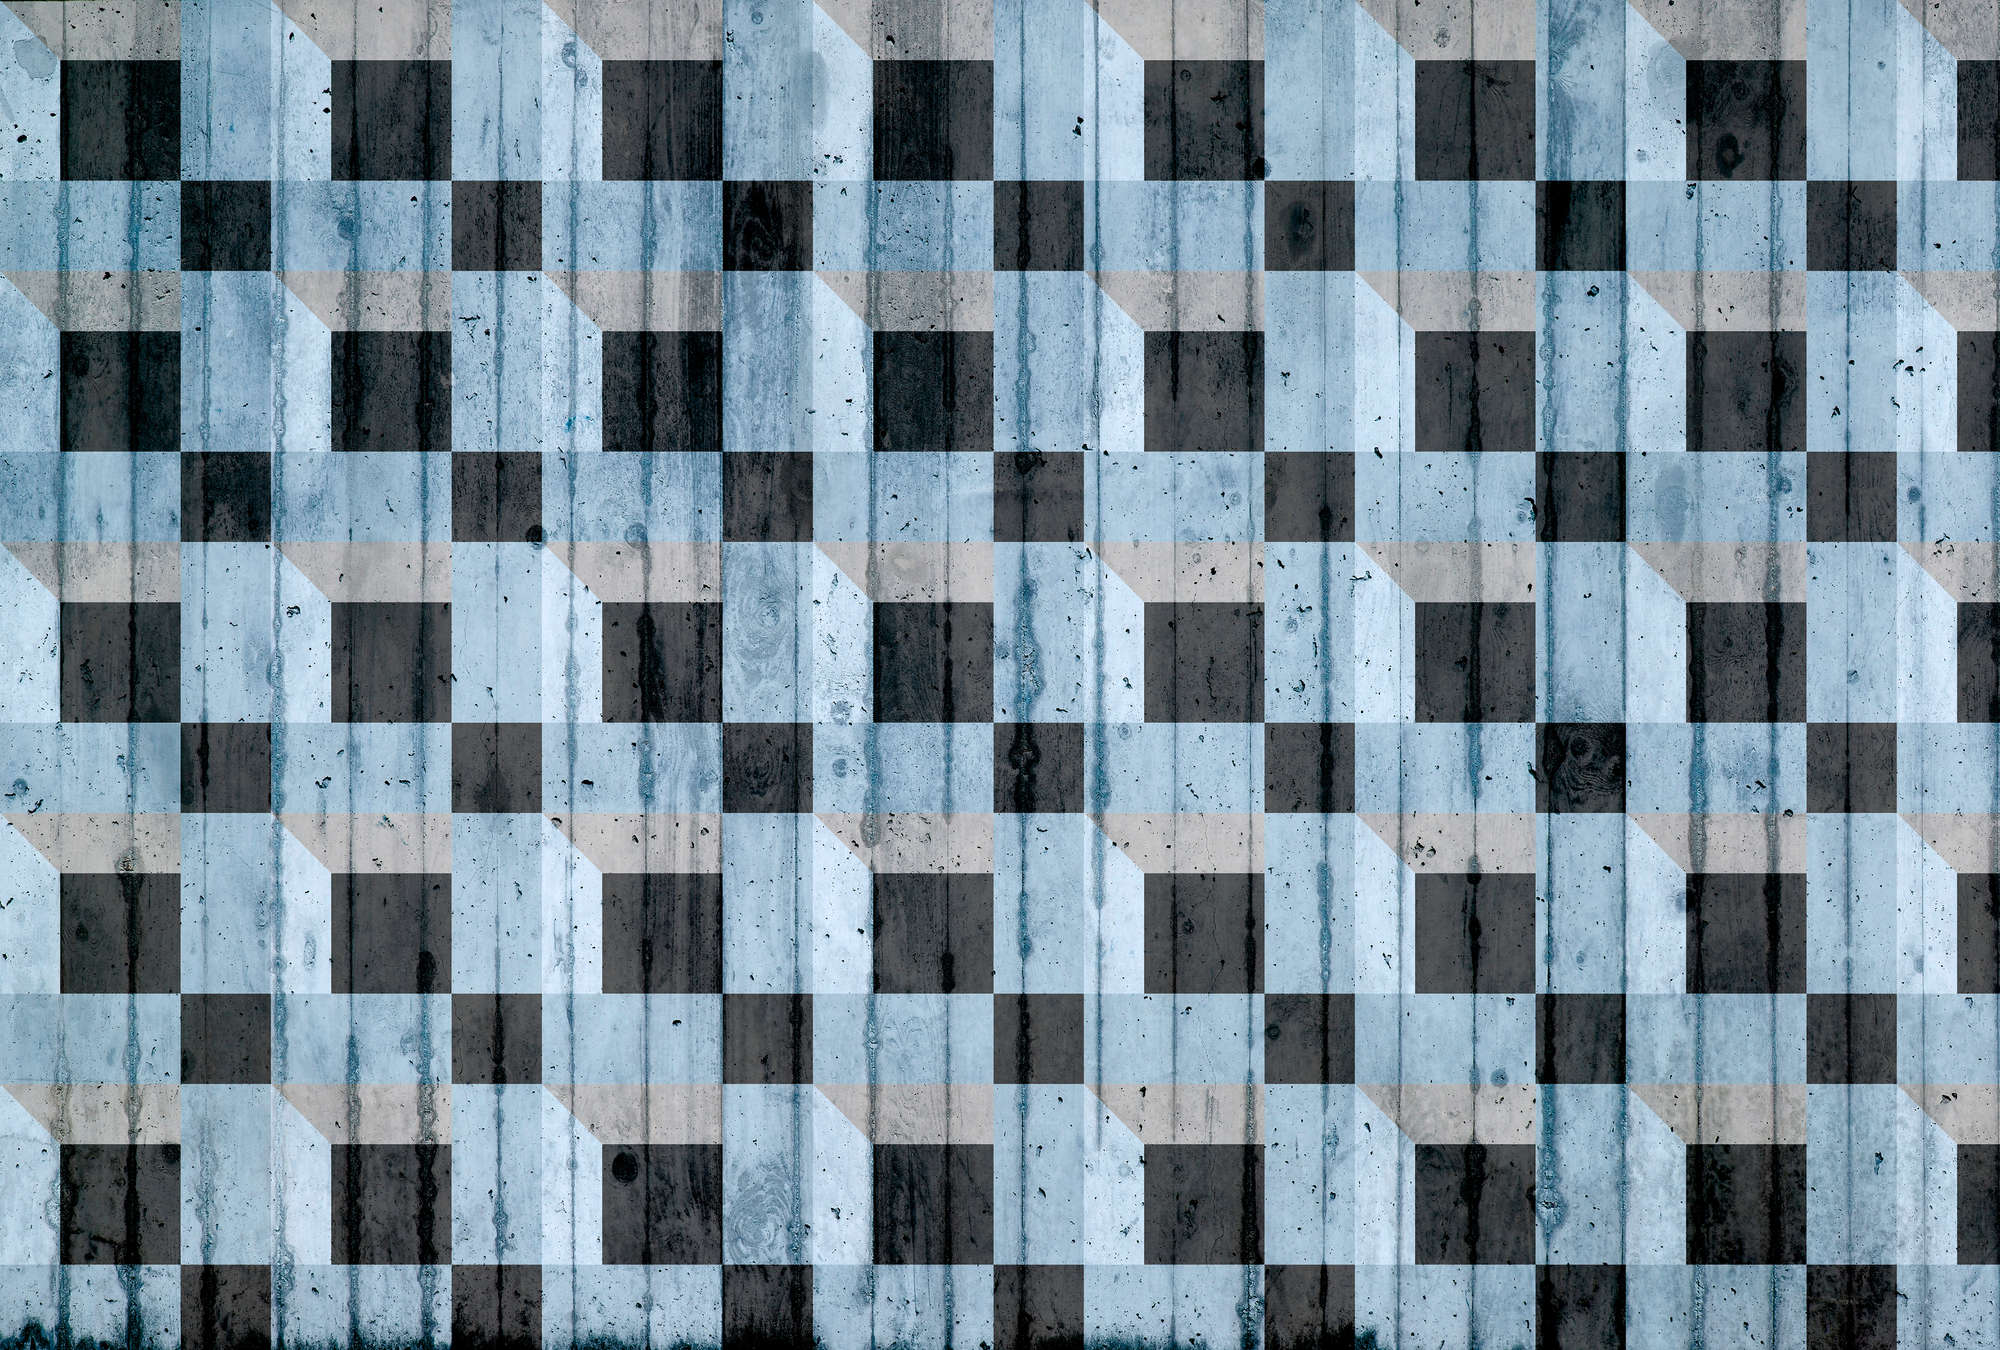             Fototapete Betonoptik mit Quadrat-Muster – Blau, Schwarz, Grau
        